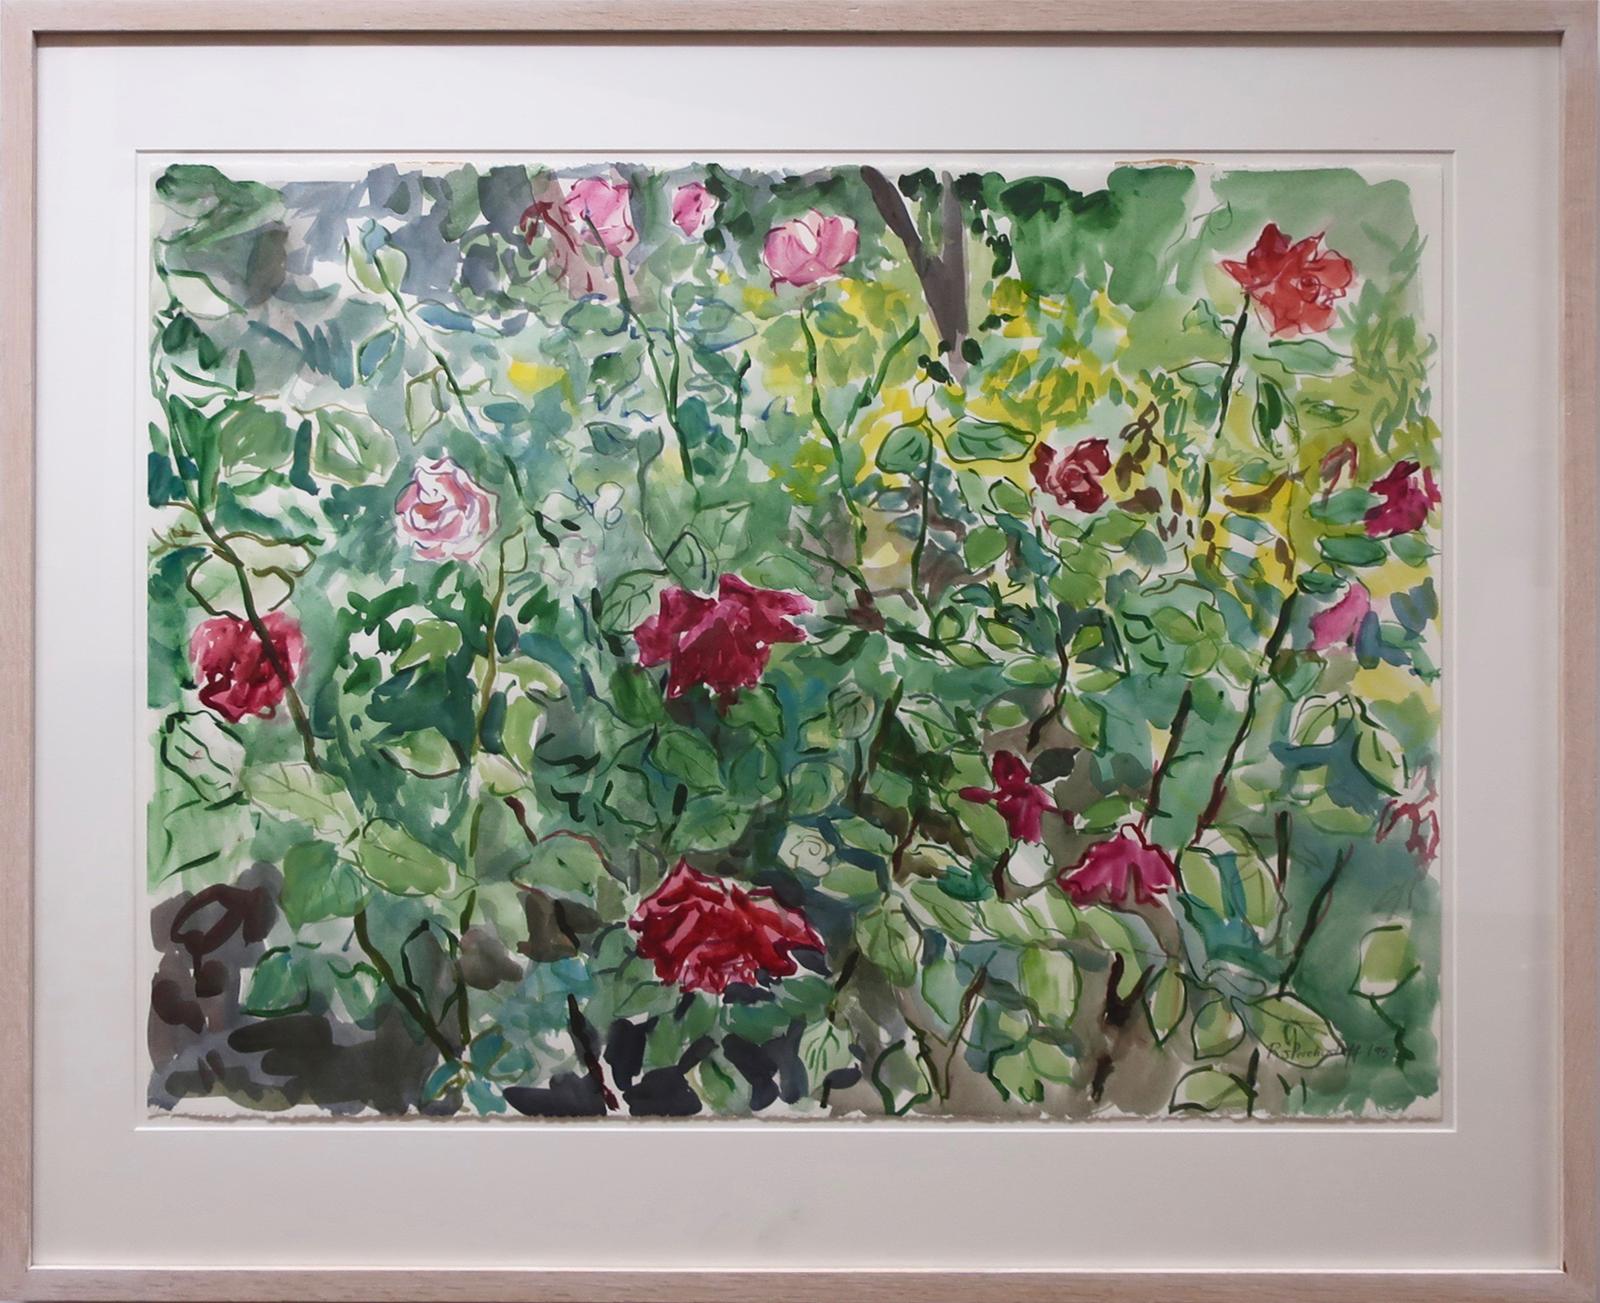 Rebecca Perehudoff (1953) - Untitled (Flowers)